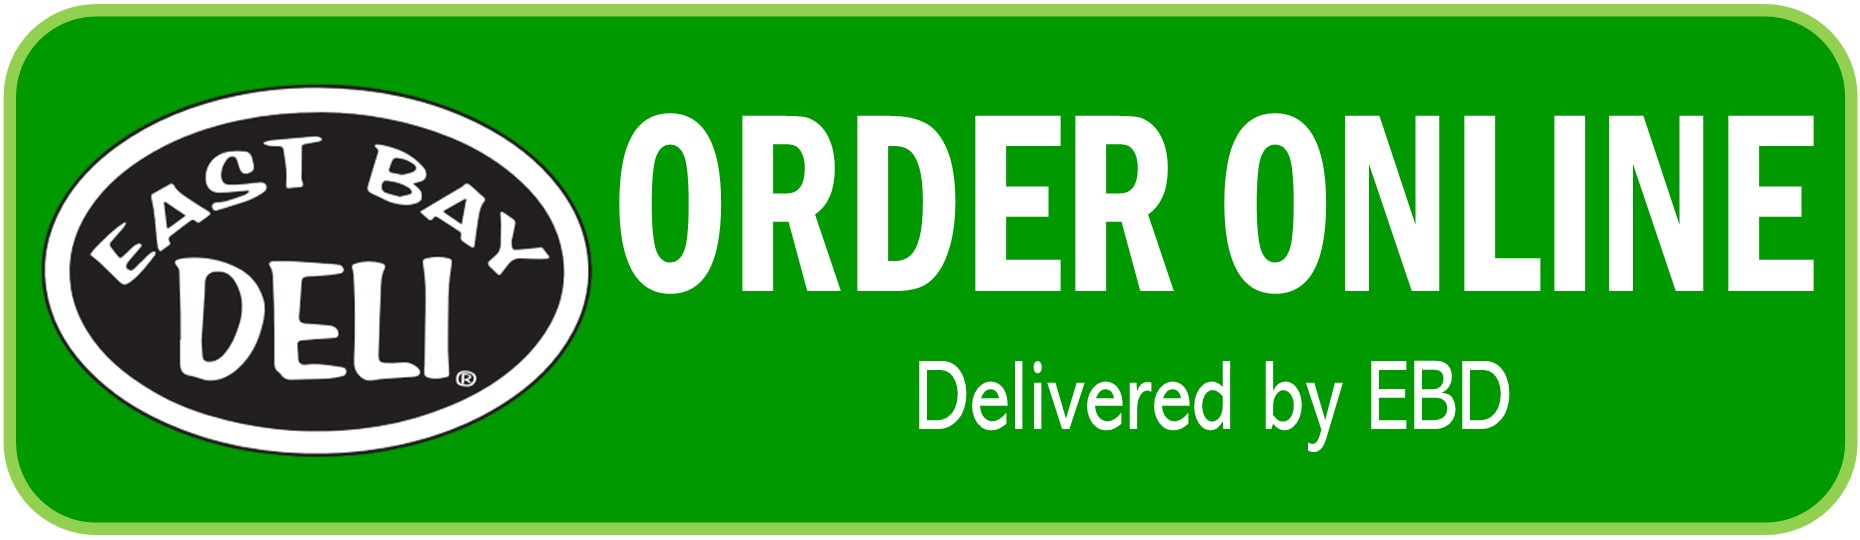 East Bay Deli Online Ordering